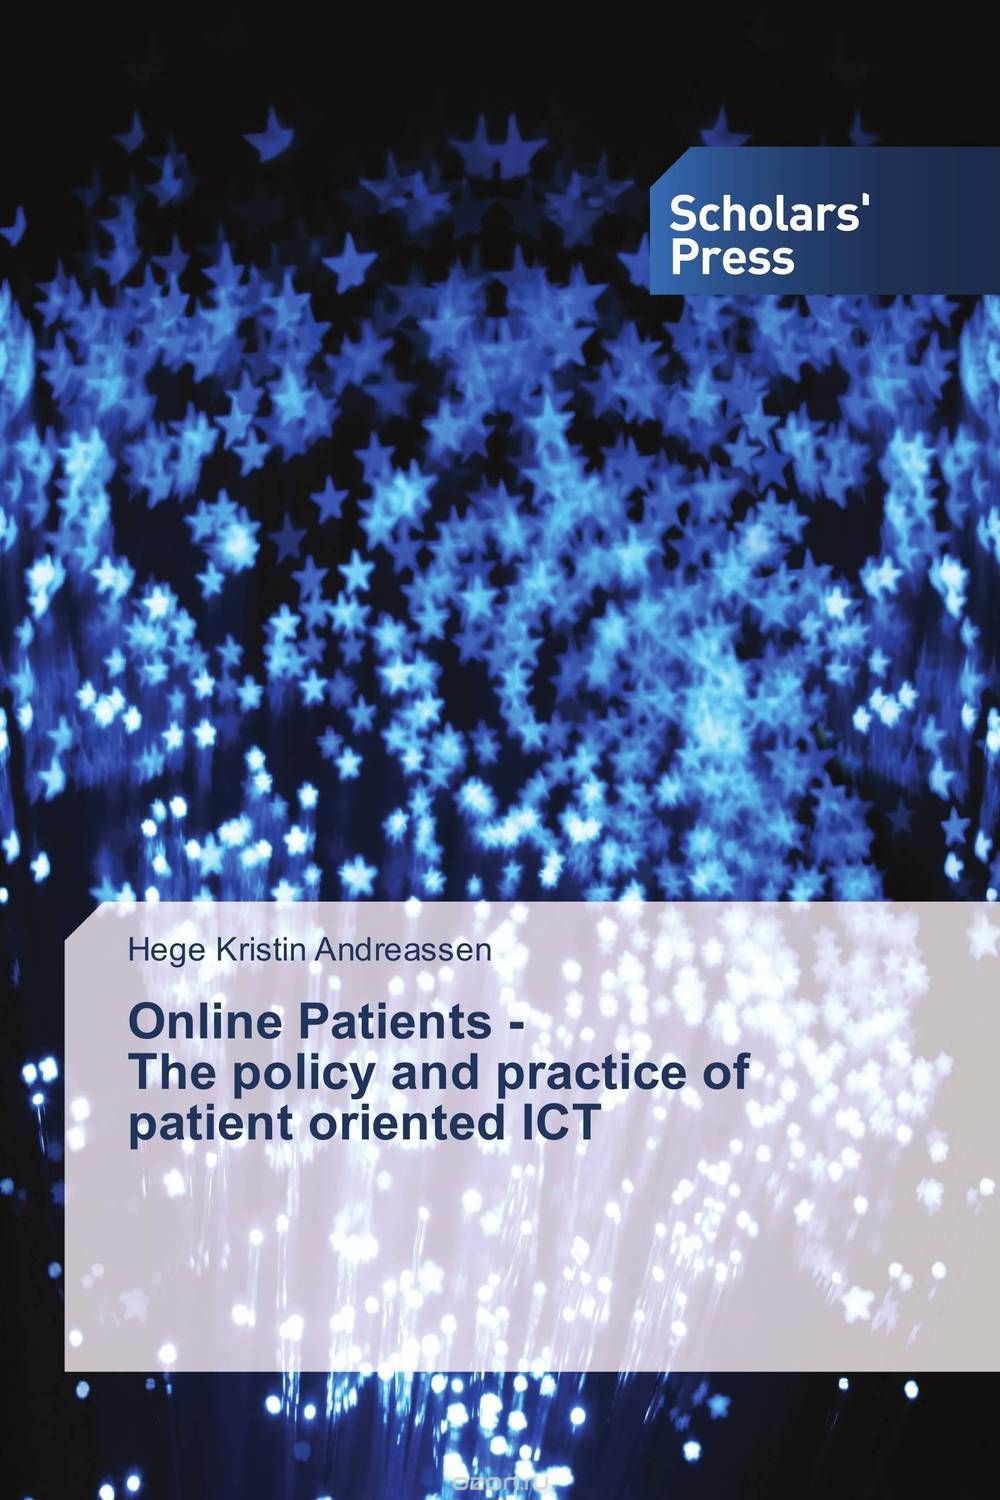 Скачать книгу "Online Patients - The policy and practice of patient oriented ICT"